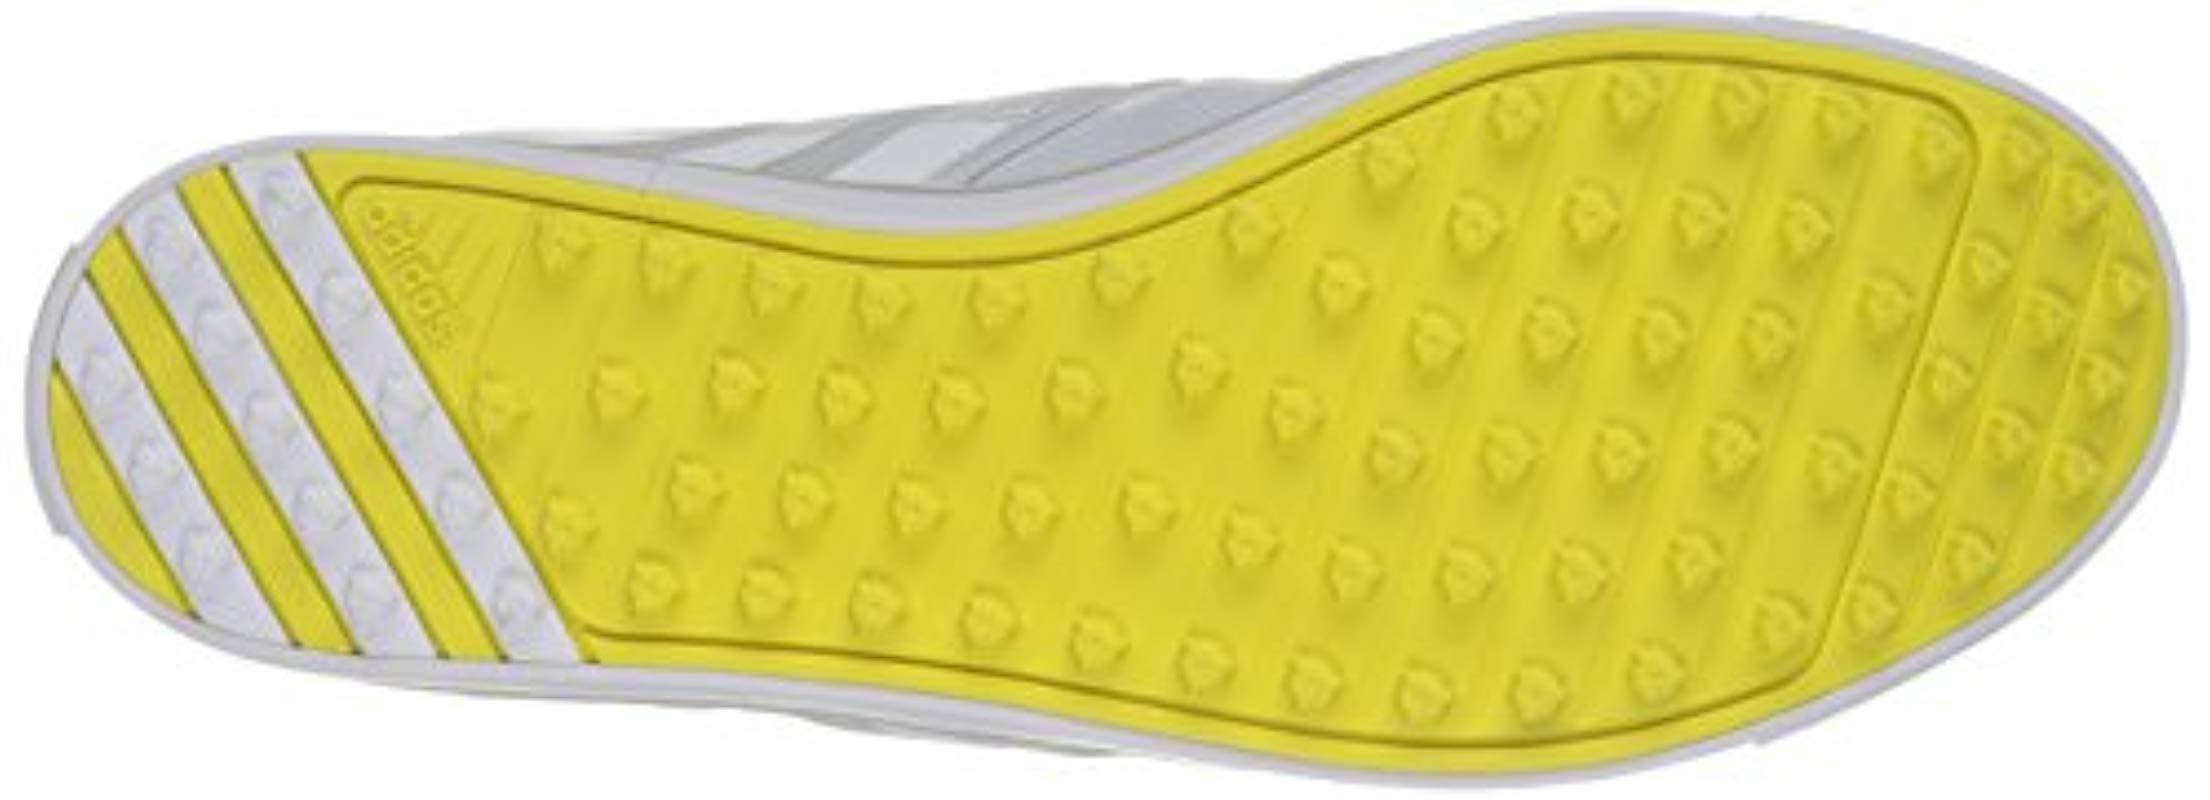 adidas adicross sl golf shoes